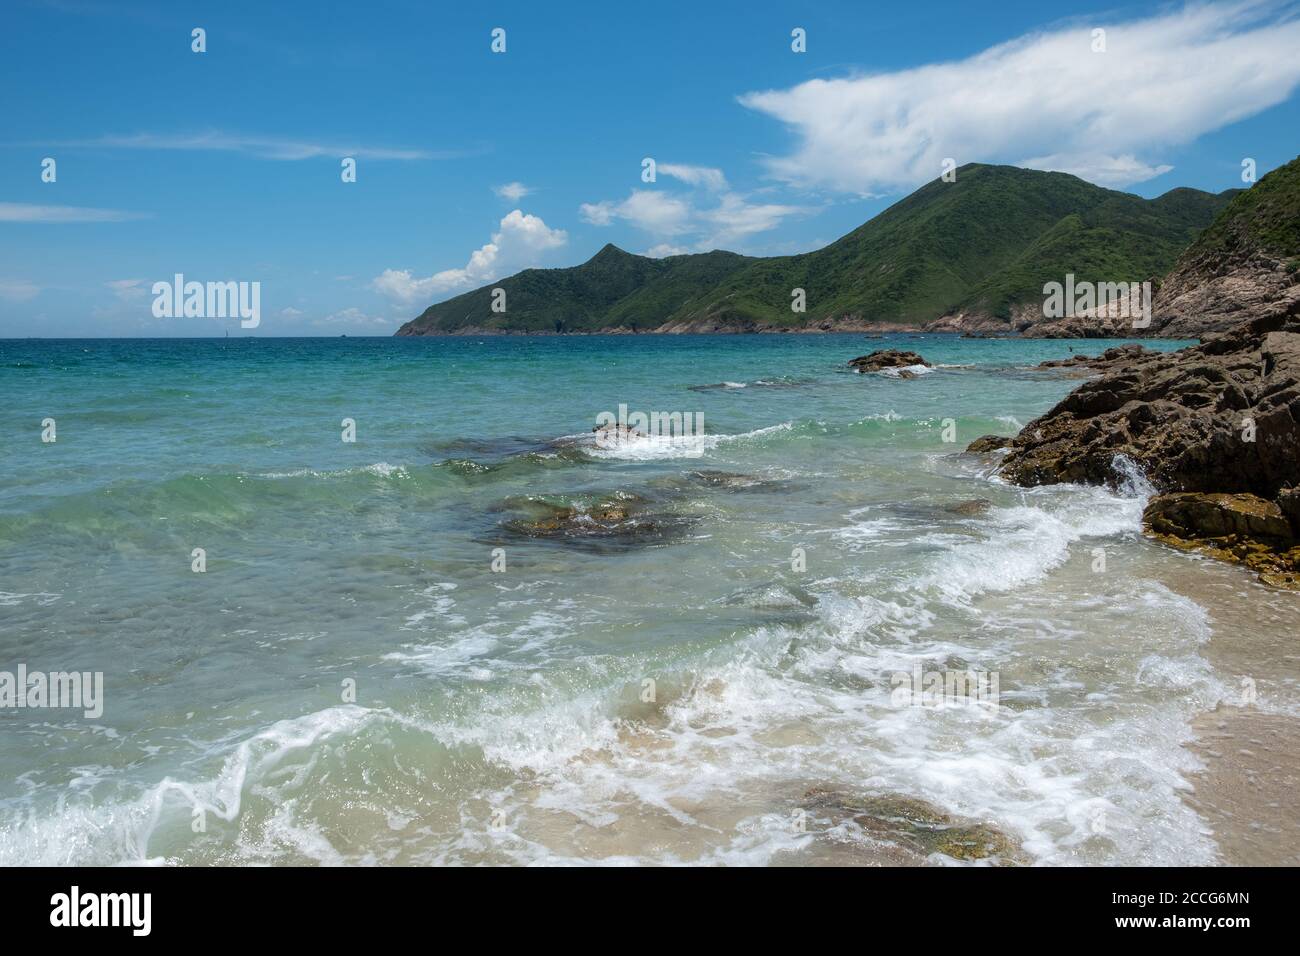 Waves gently crashing on Ham Tin beach in Sai Kung, Hong Kong Stock Photo